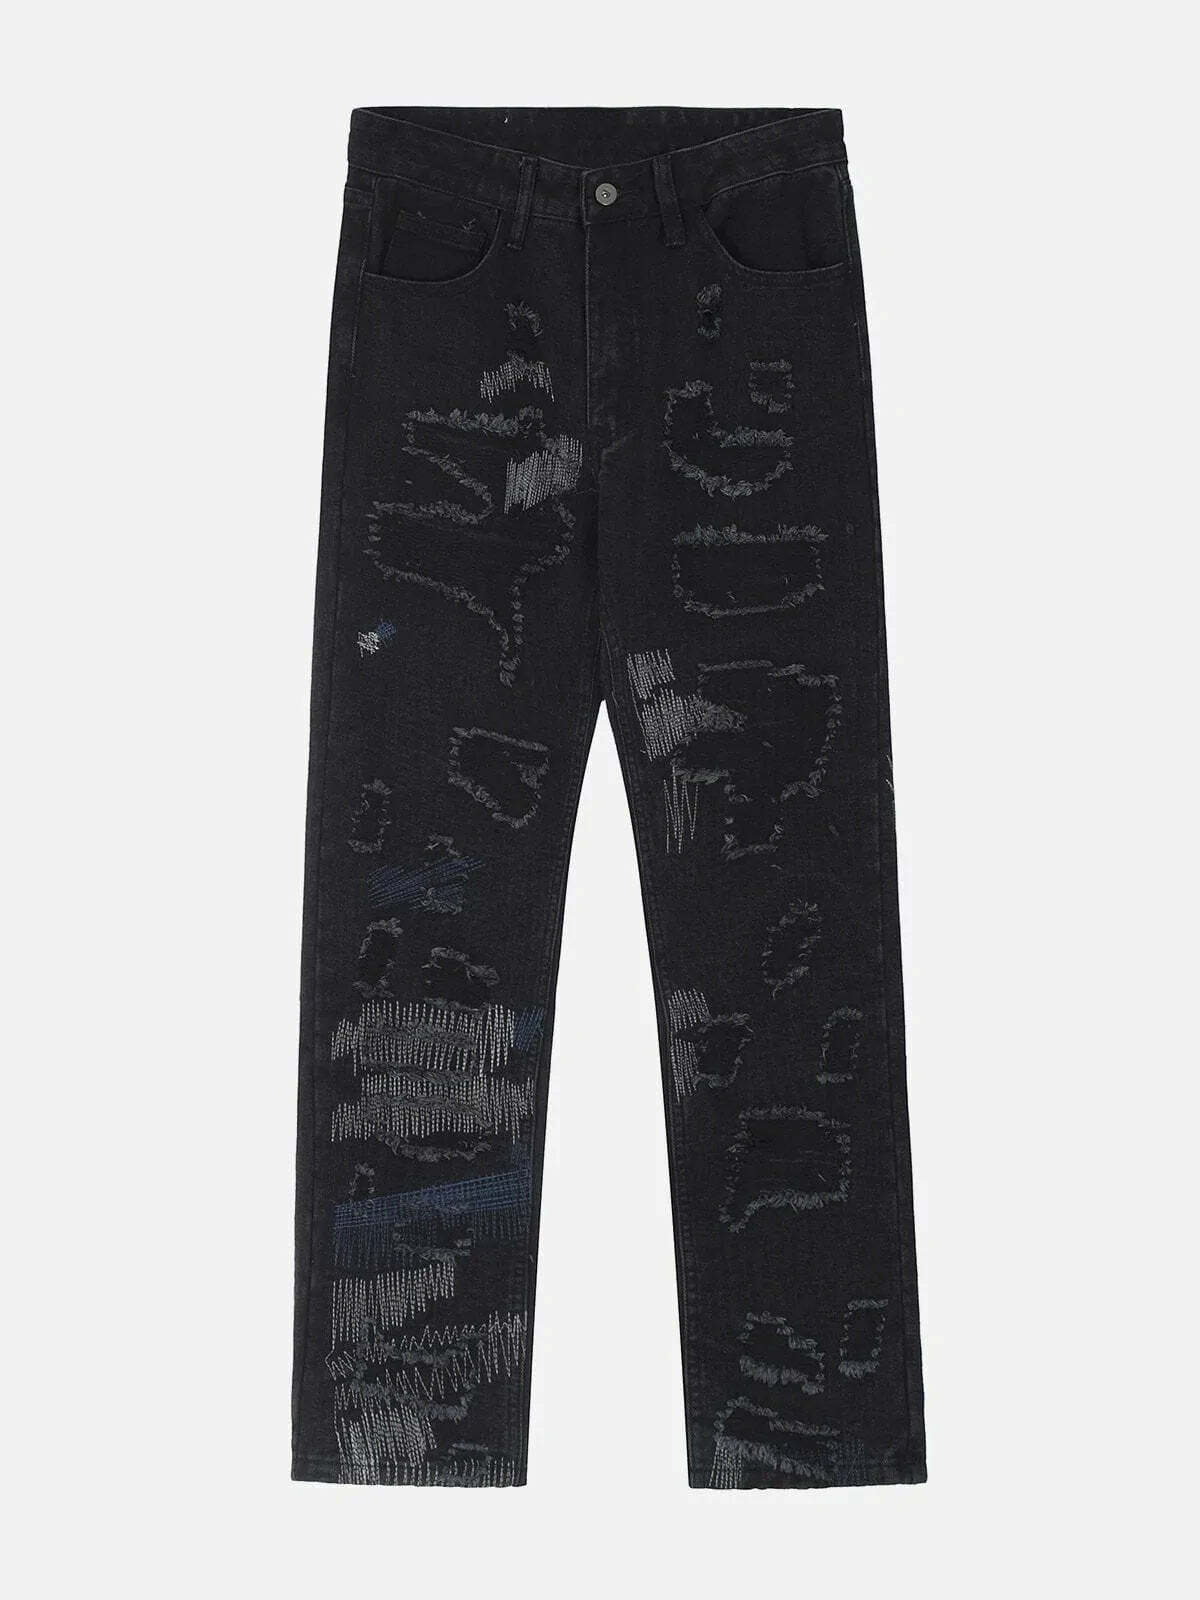 revolutionary patchwork embroidered jeans edgy & irregular design 5423